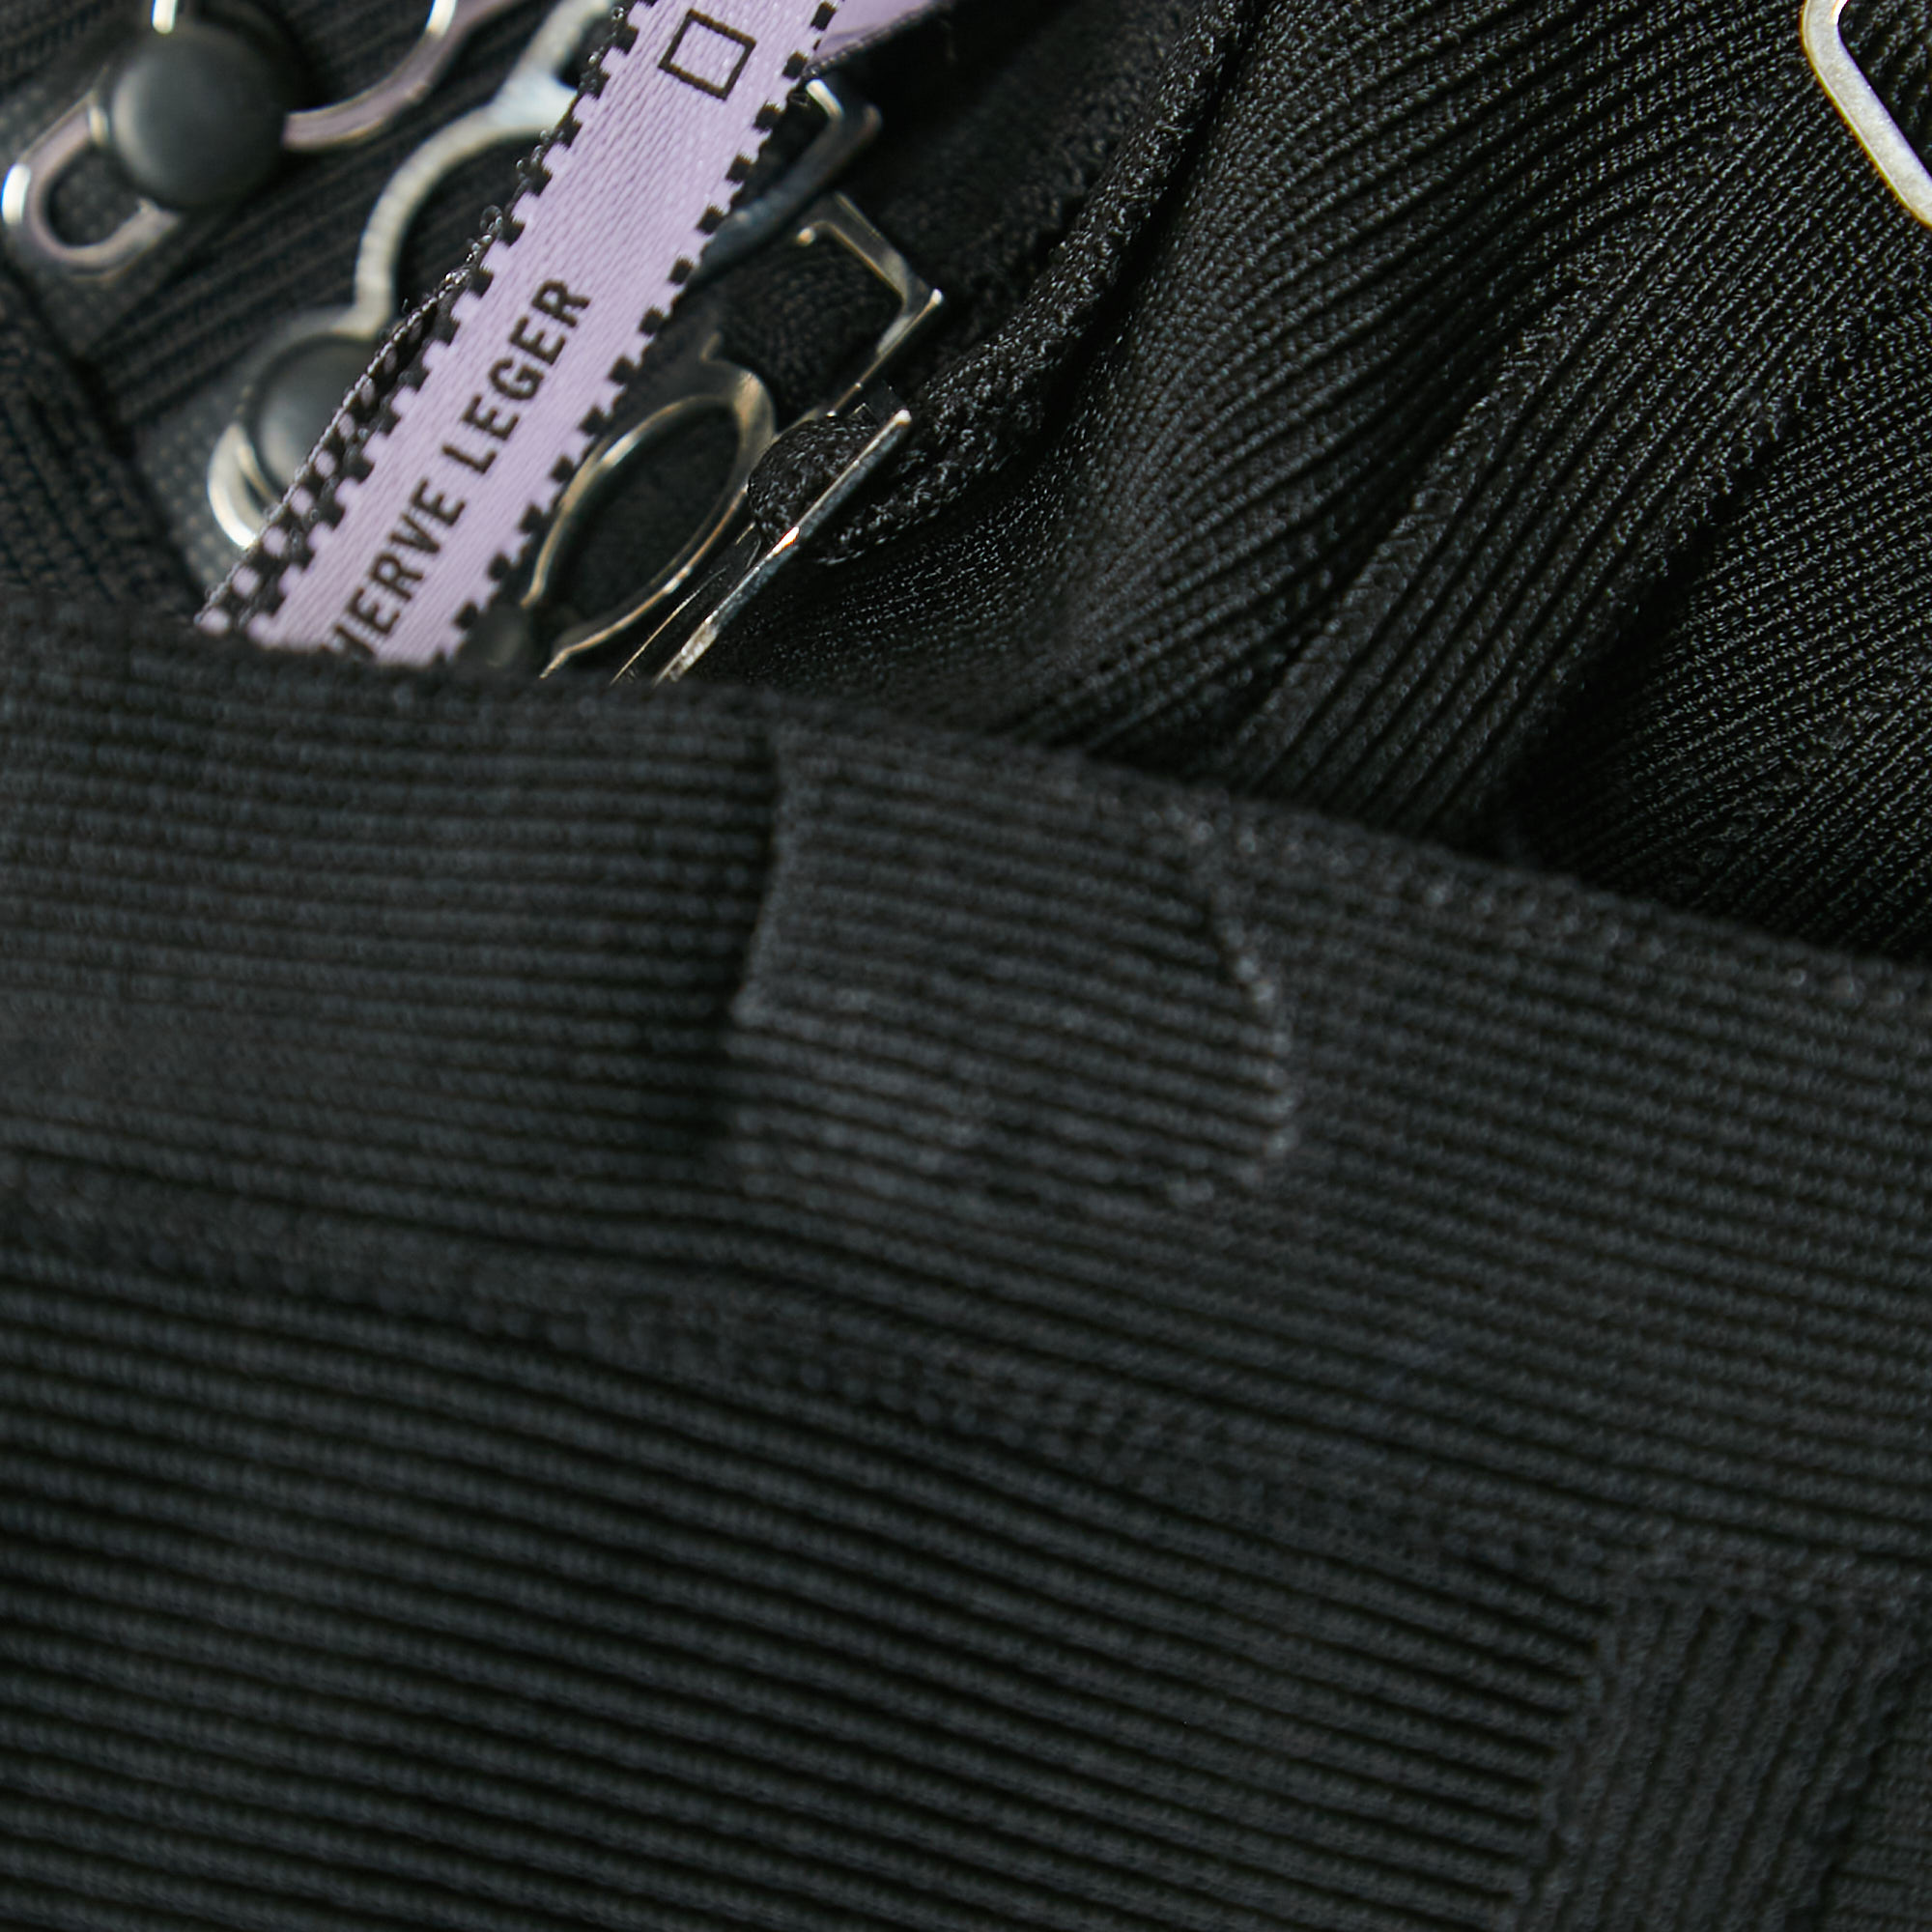 Herve Leger Black Knit Lace-Up Detail Mini Skirt M